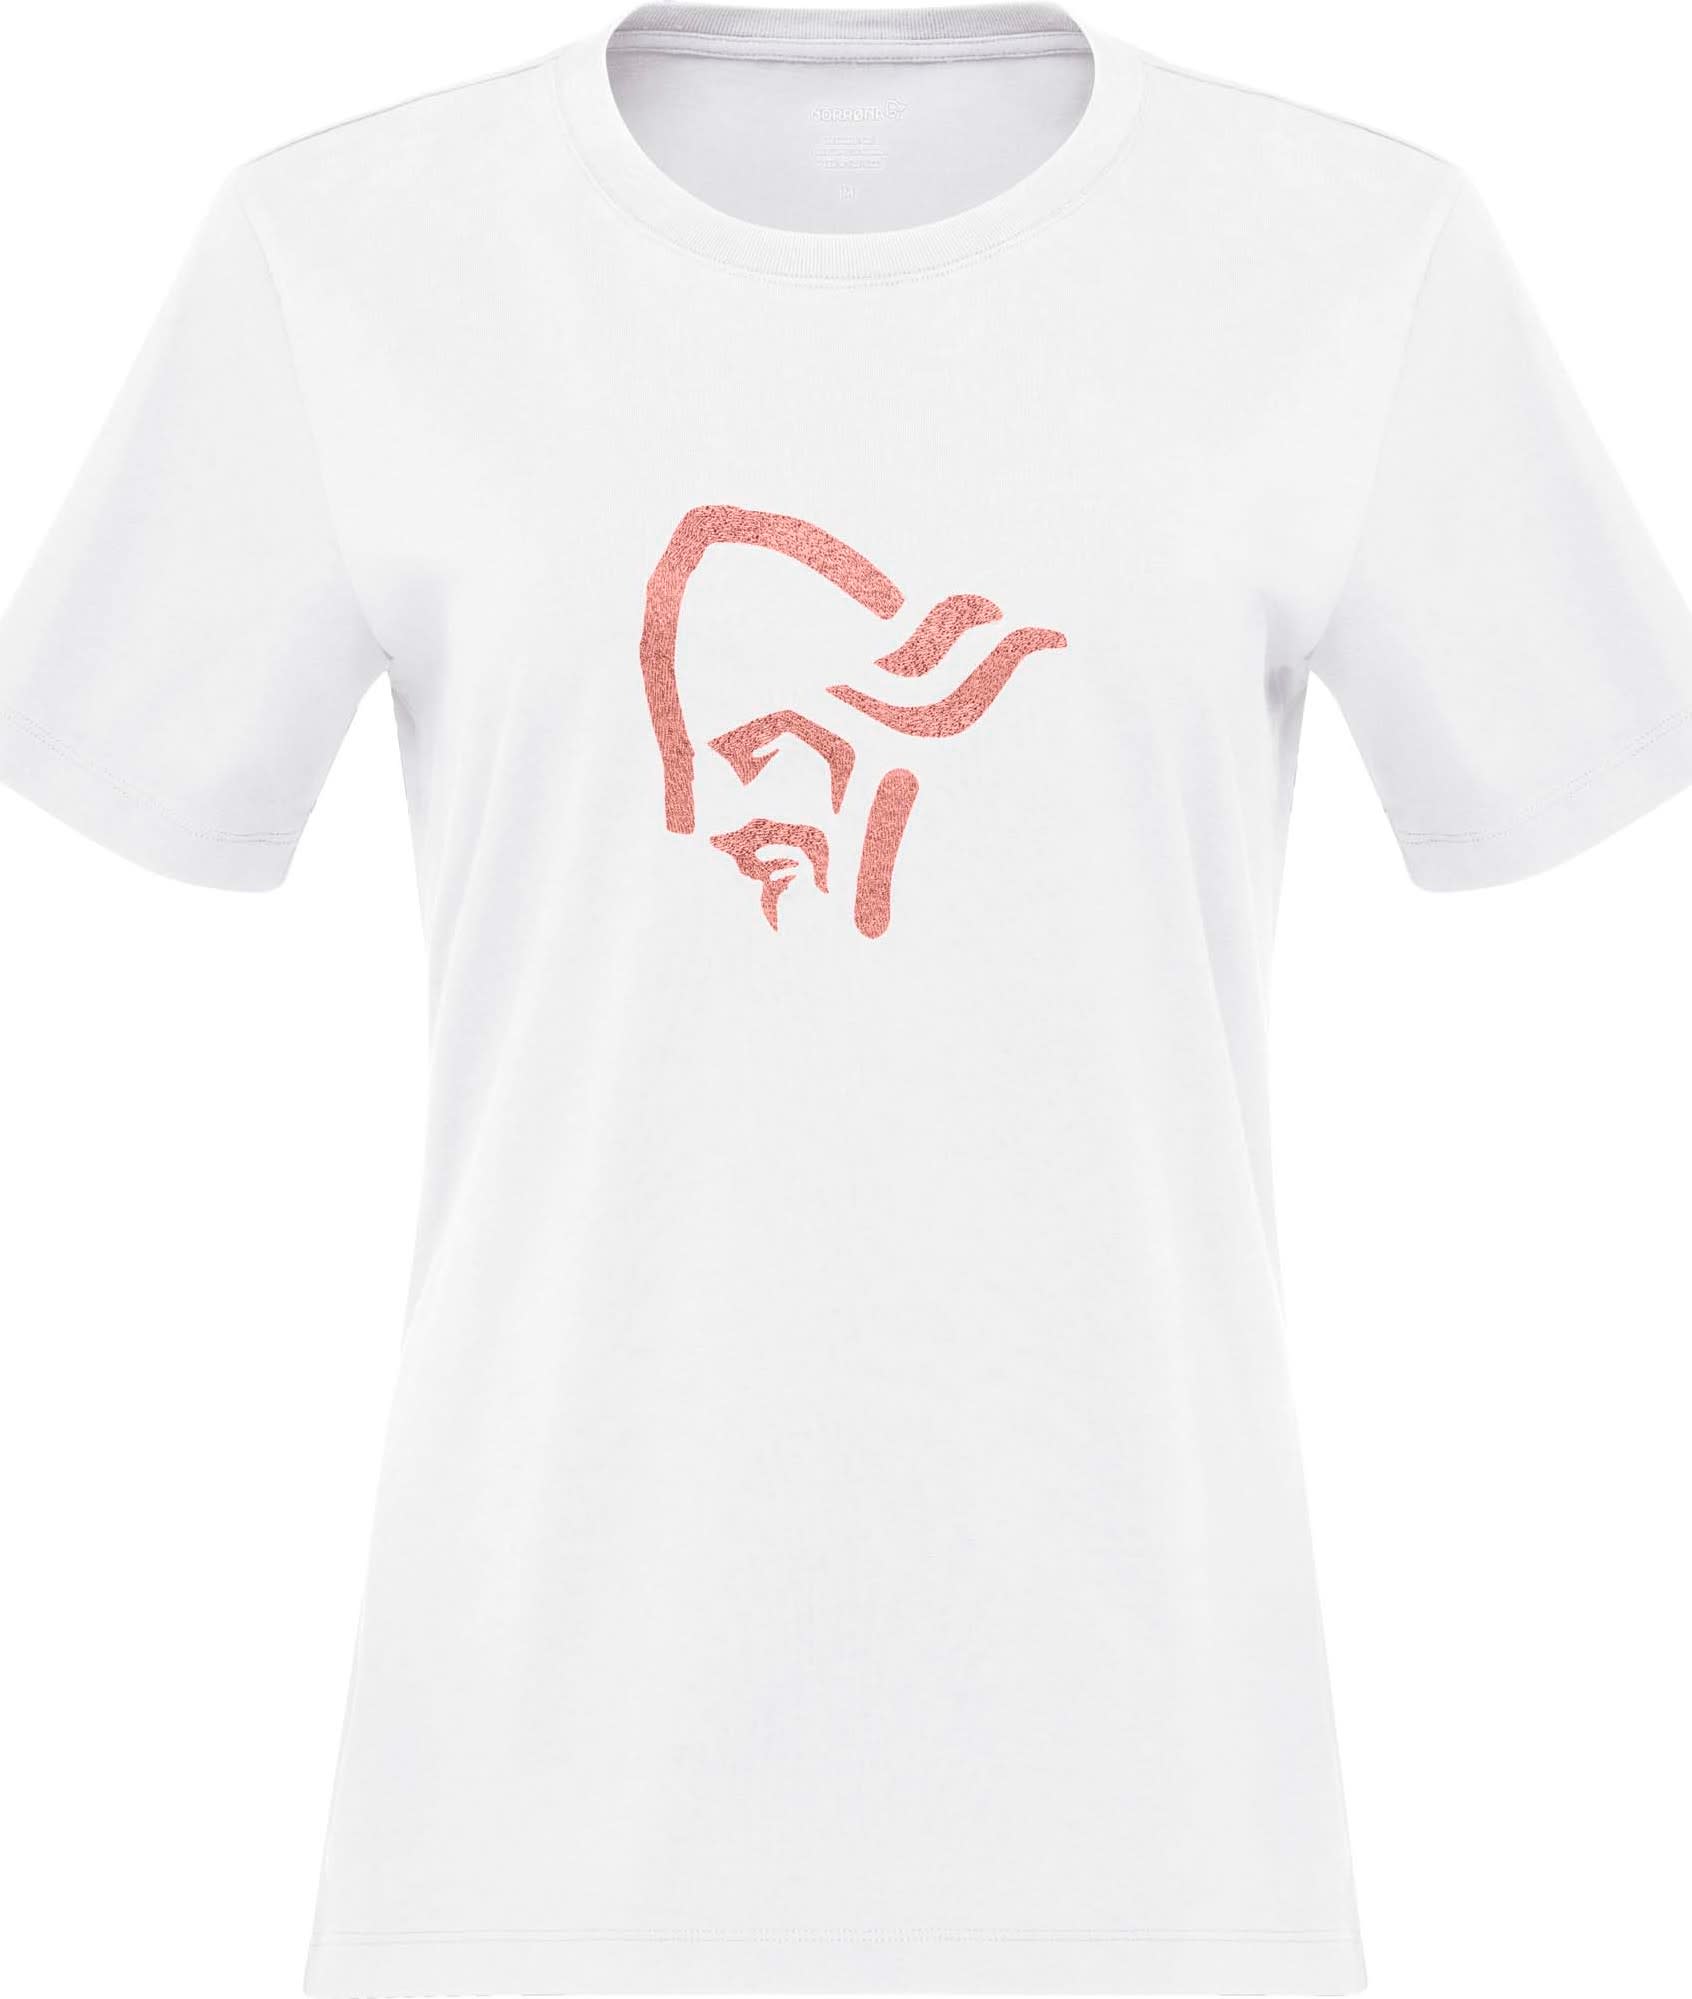 Women's /29 Cotton Material Viking T-Shirt Pure White